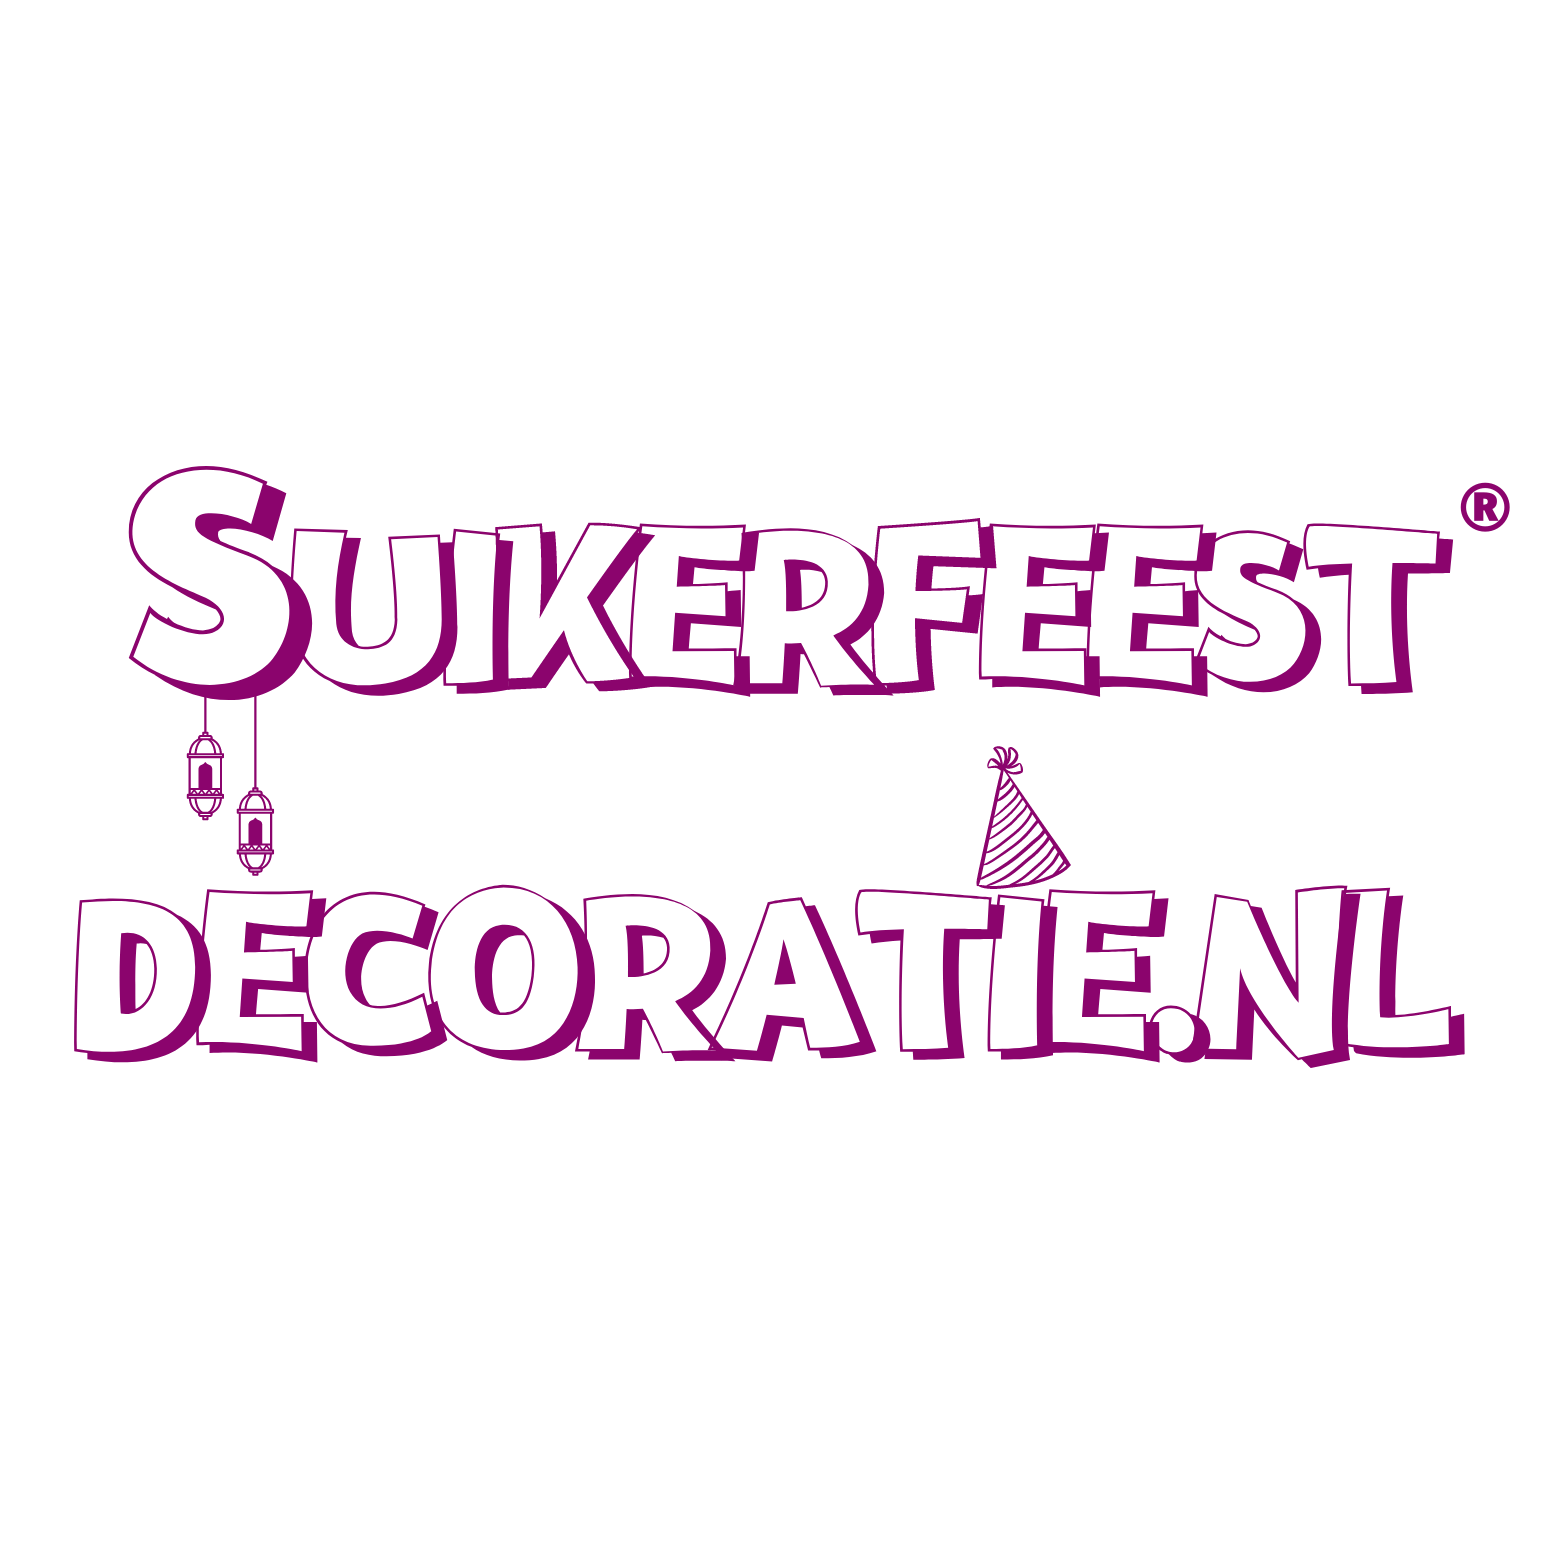 Suikerfeest decoratie – Suikerfeest